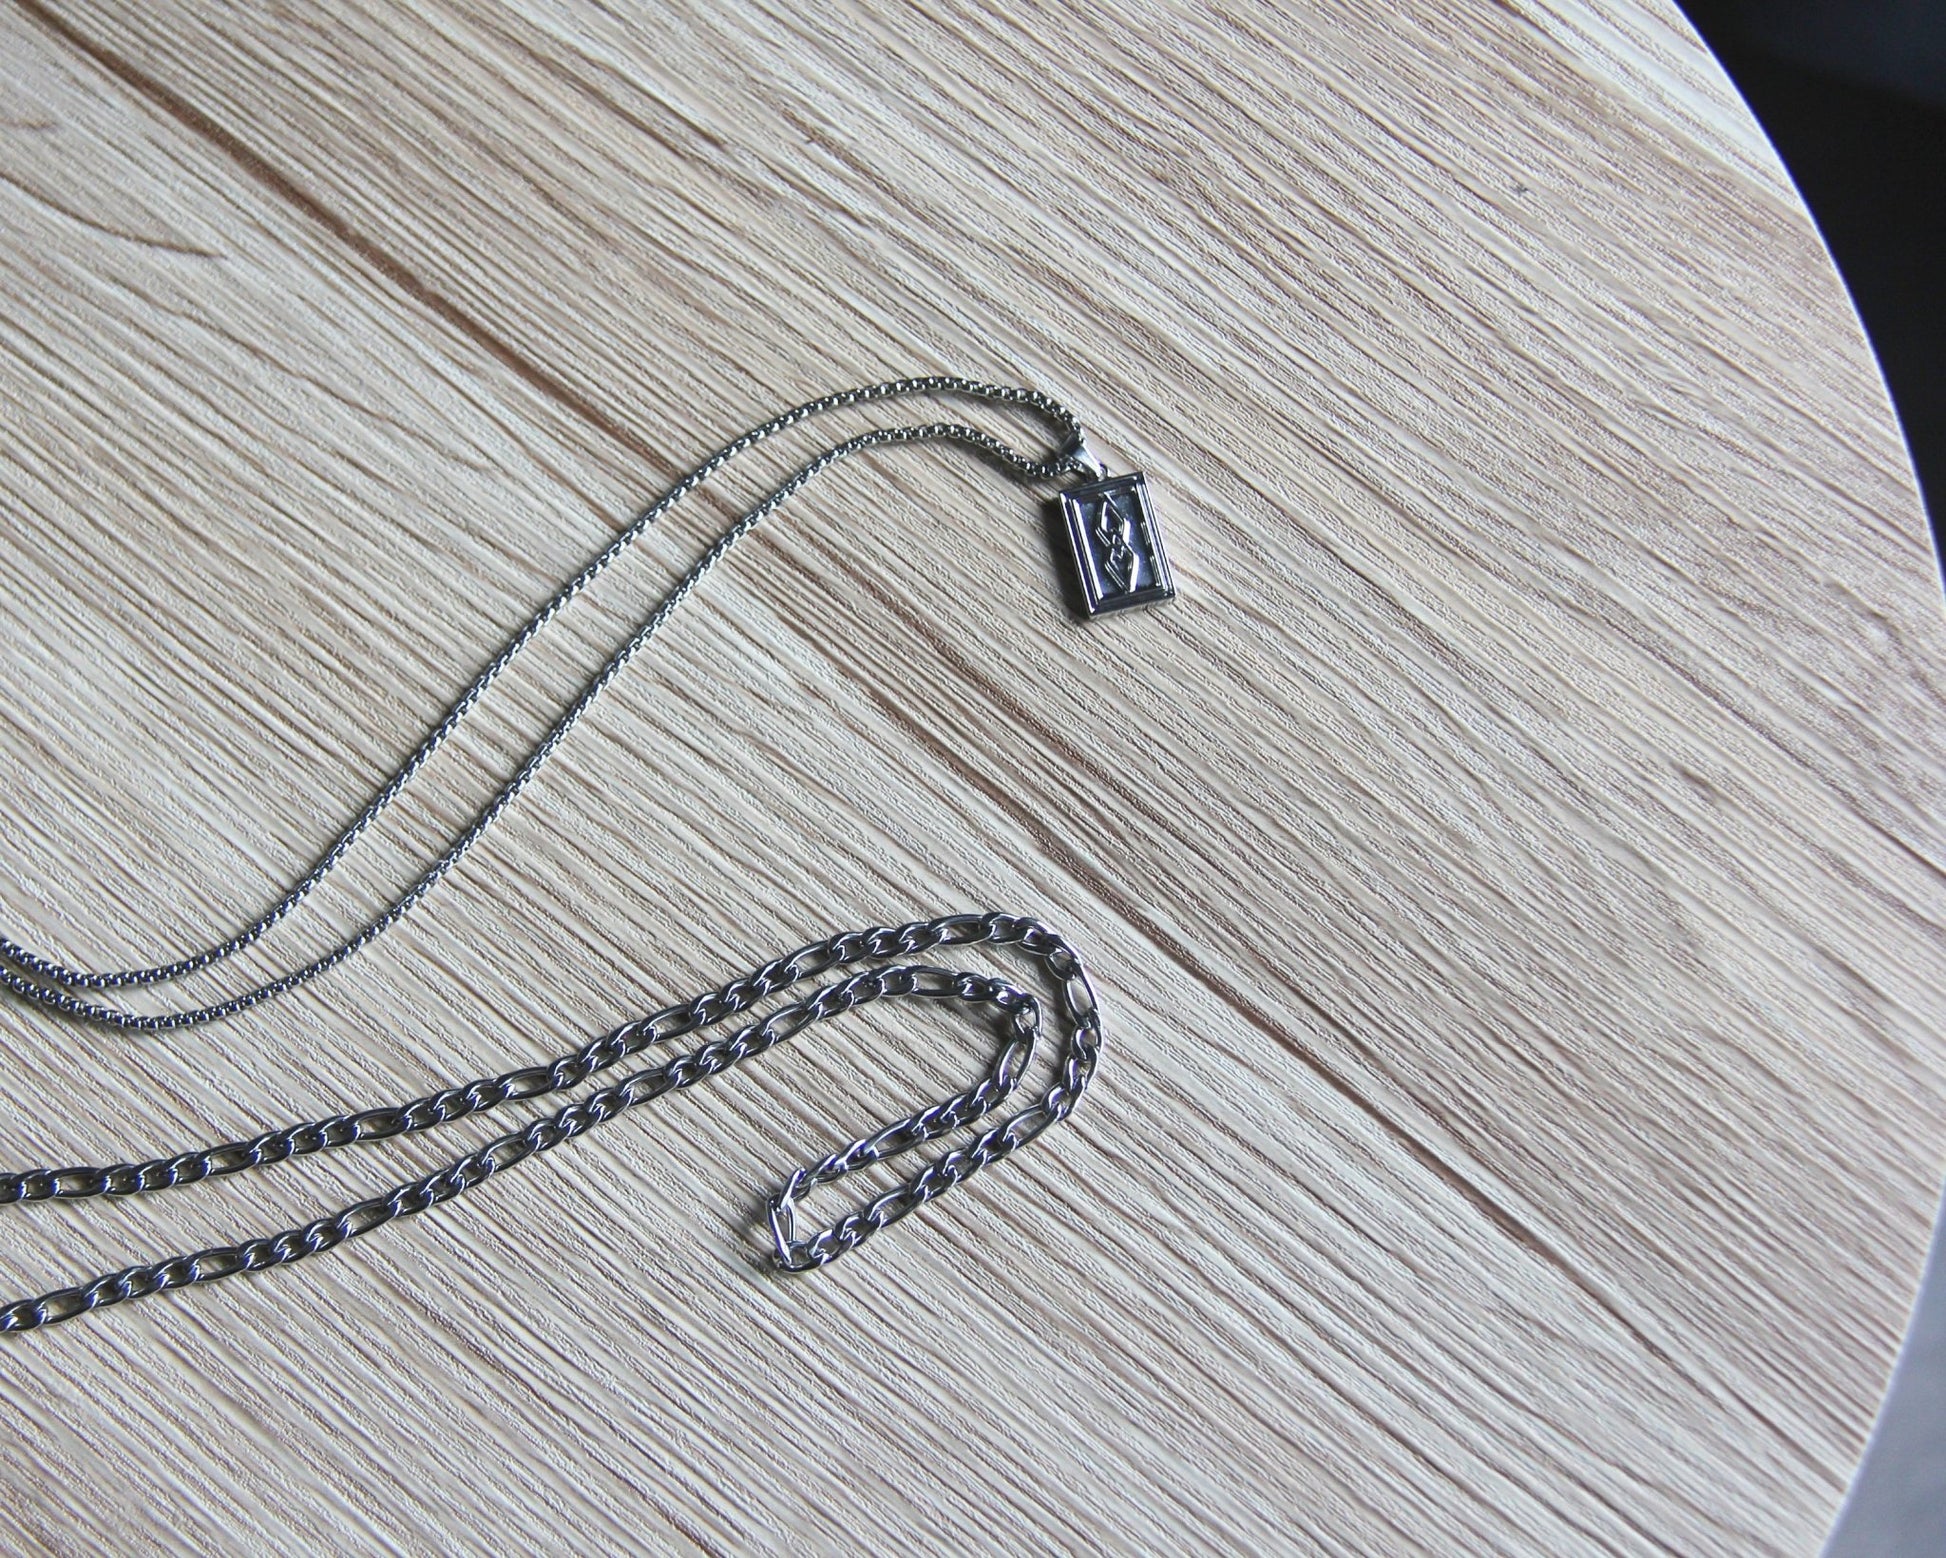 Silver Rectangle Card Pendant Necklace for Men or Women / 